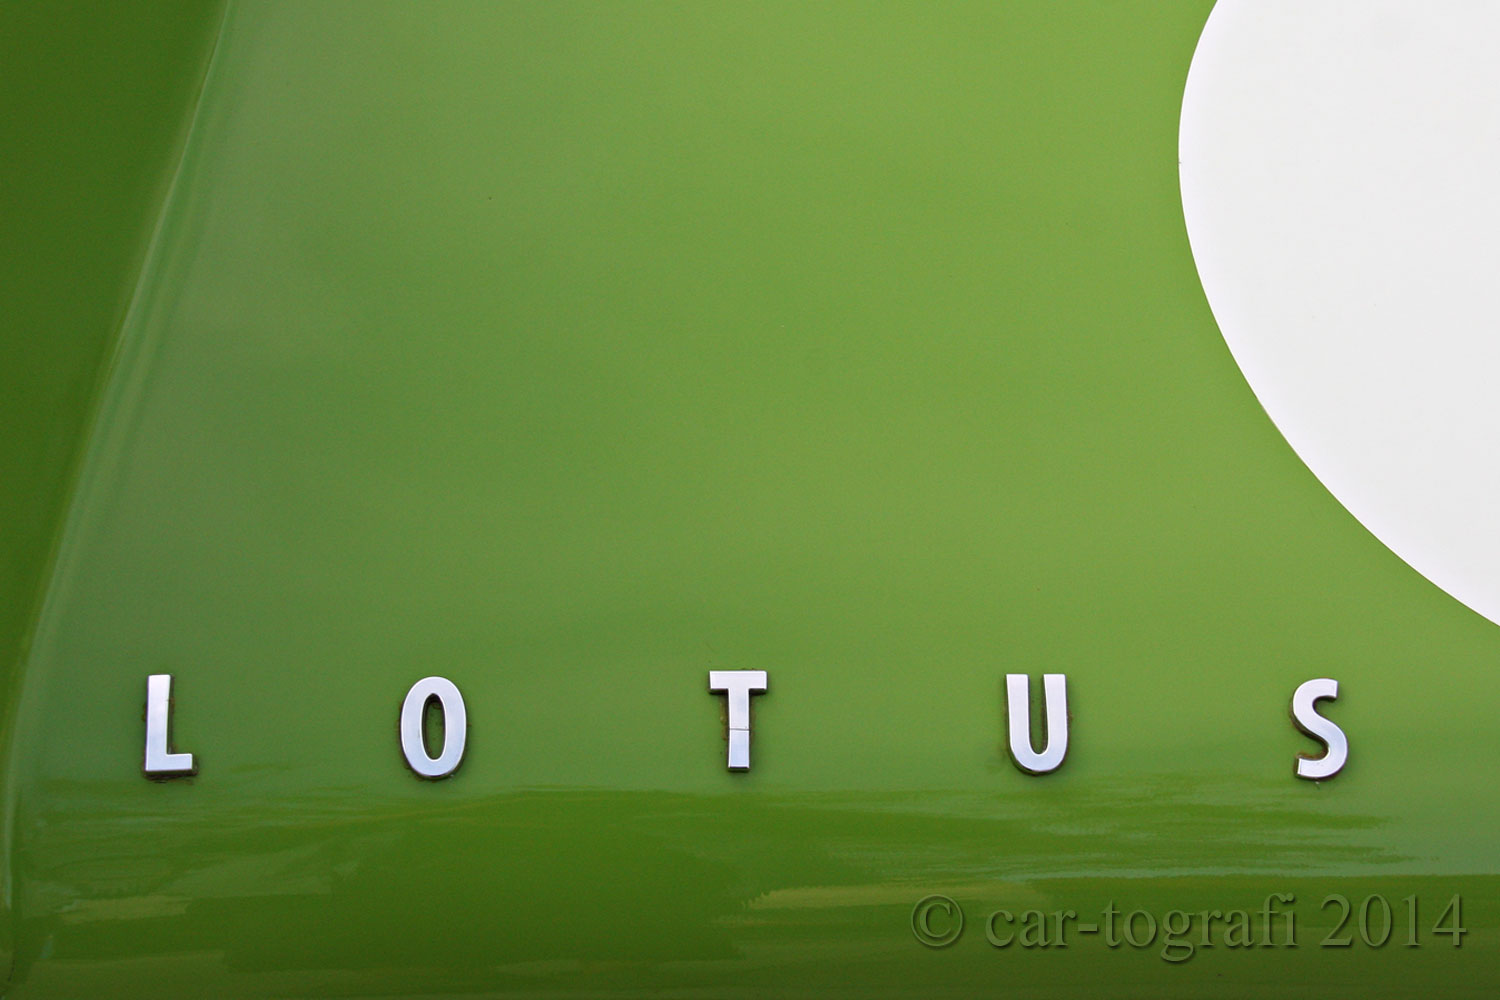 signature-lotus-car-tografi-2014.jpg